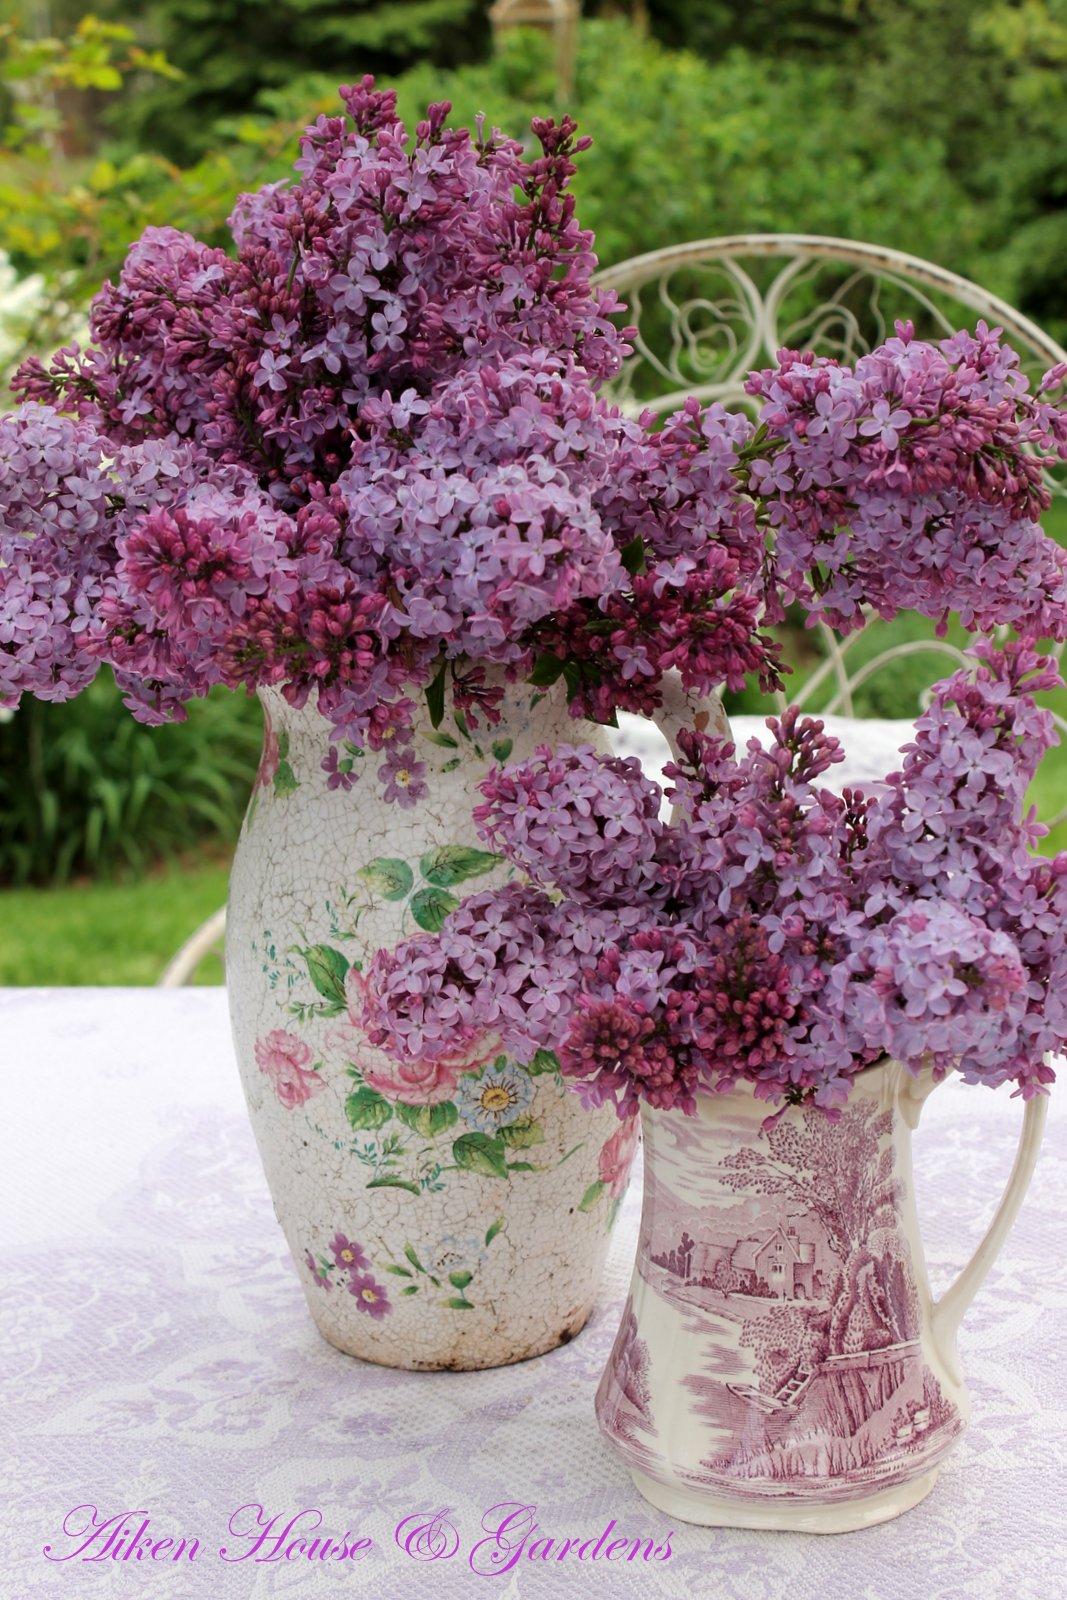 Aiken House & Gardens: It's Lilac Time!